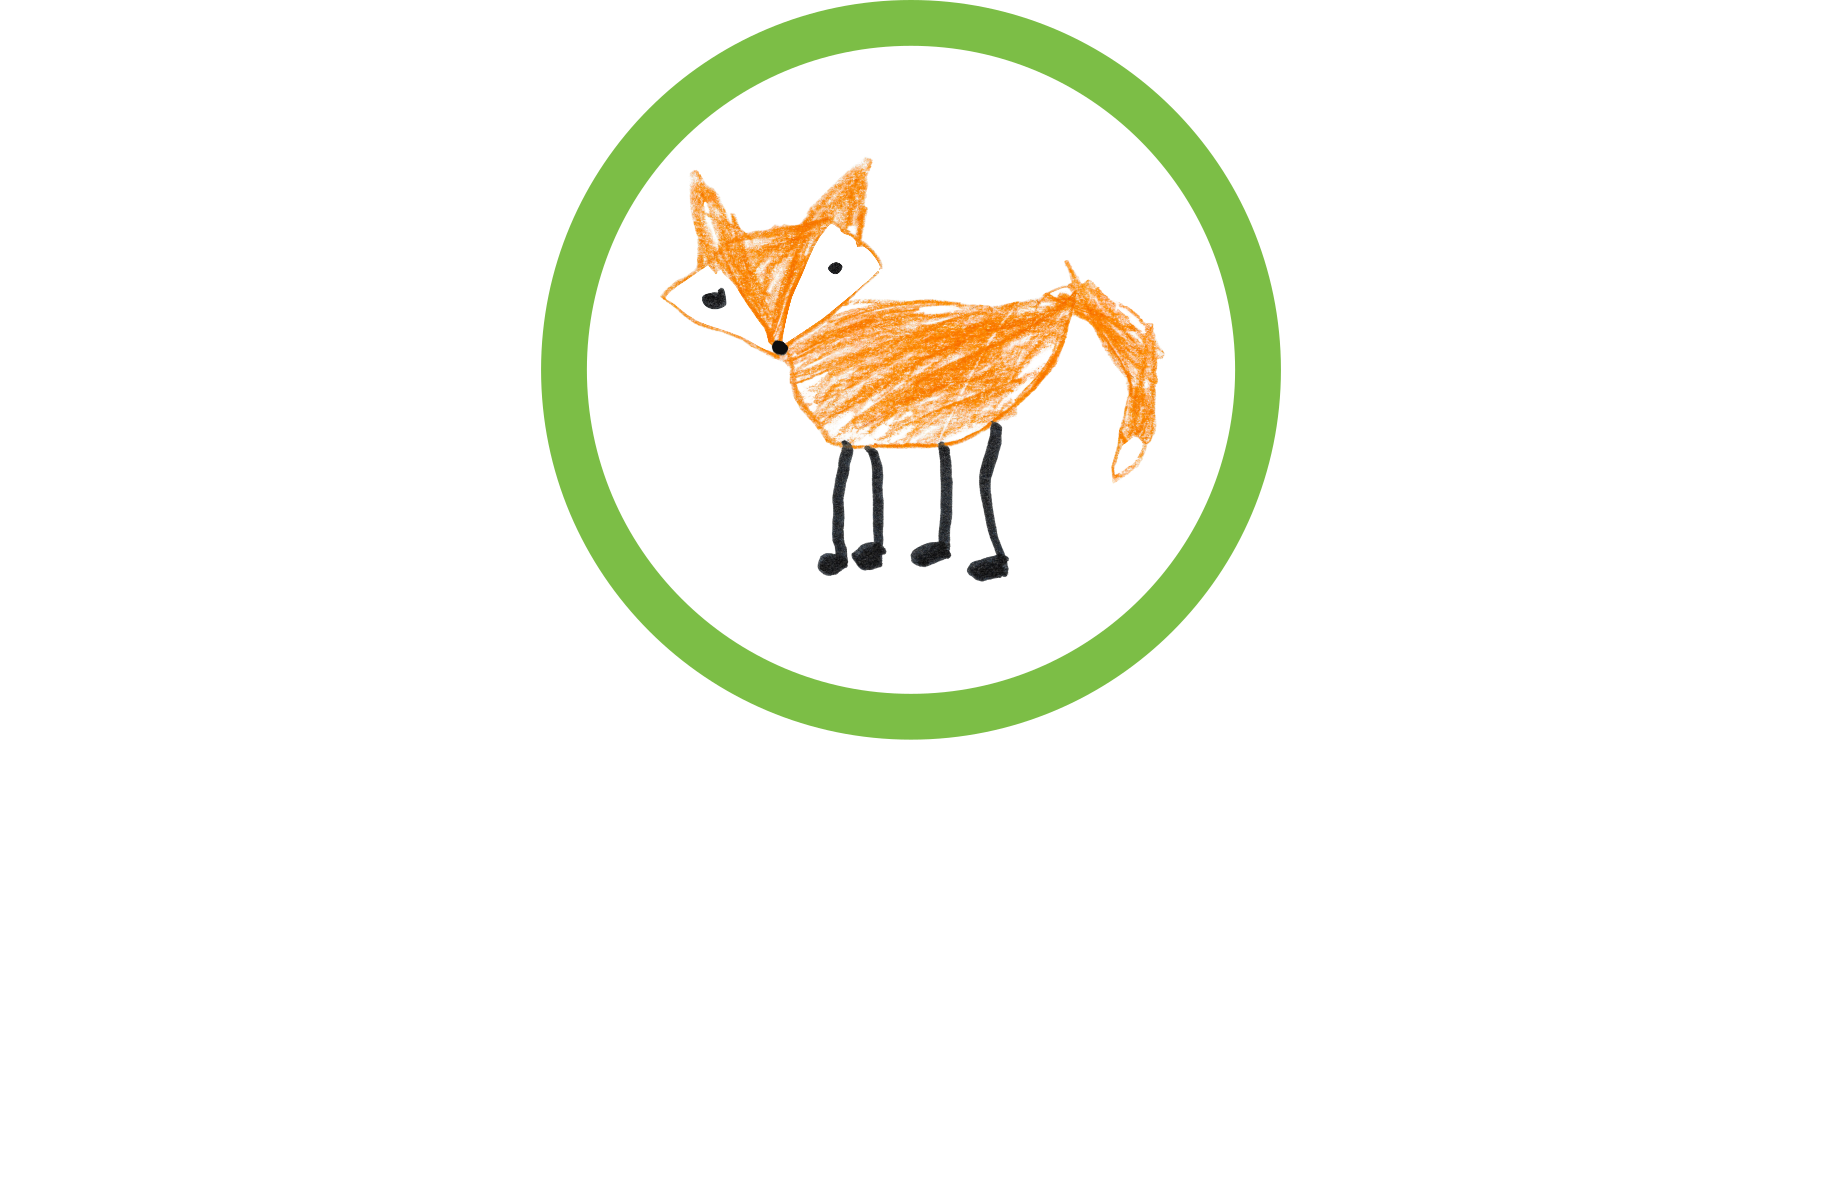 Förderverein Kita Kleine Sprachfüchse Neuenhagen e. V.